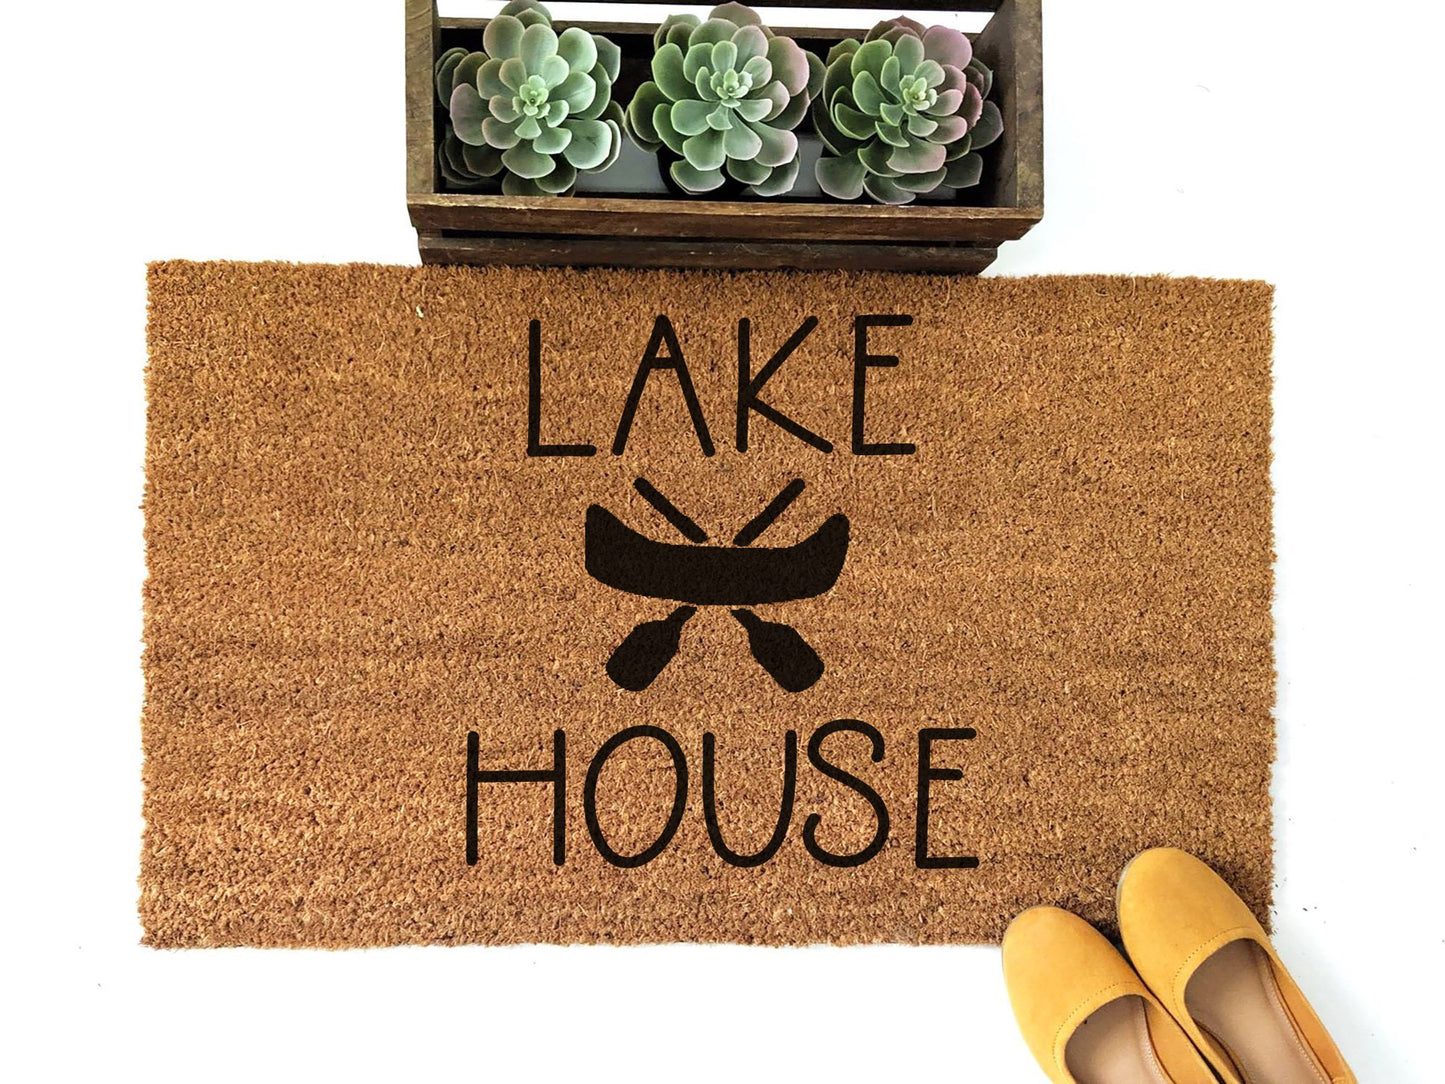 Lake House Doormat